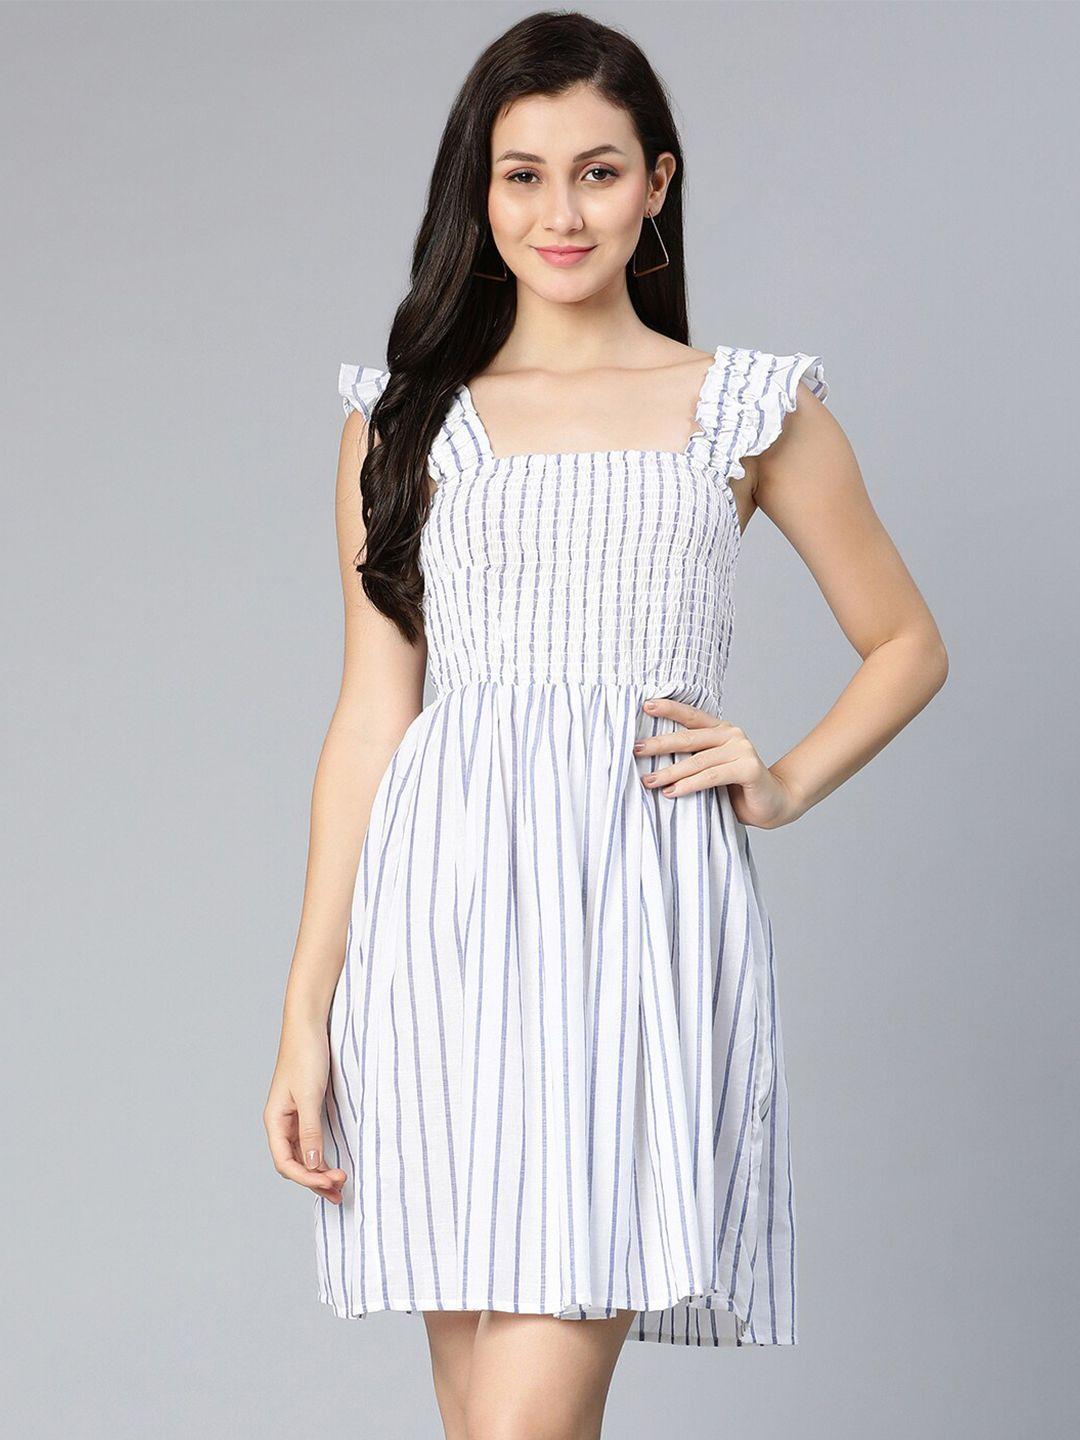 oxolloxo white & blue striped dress